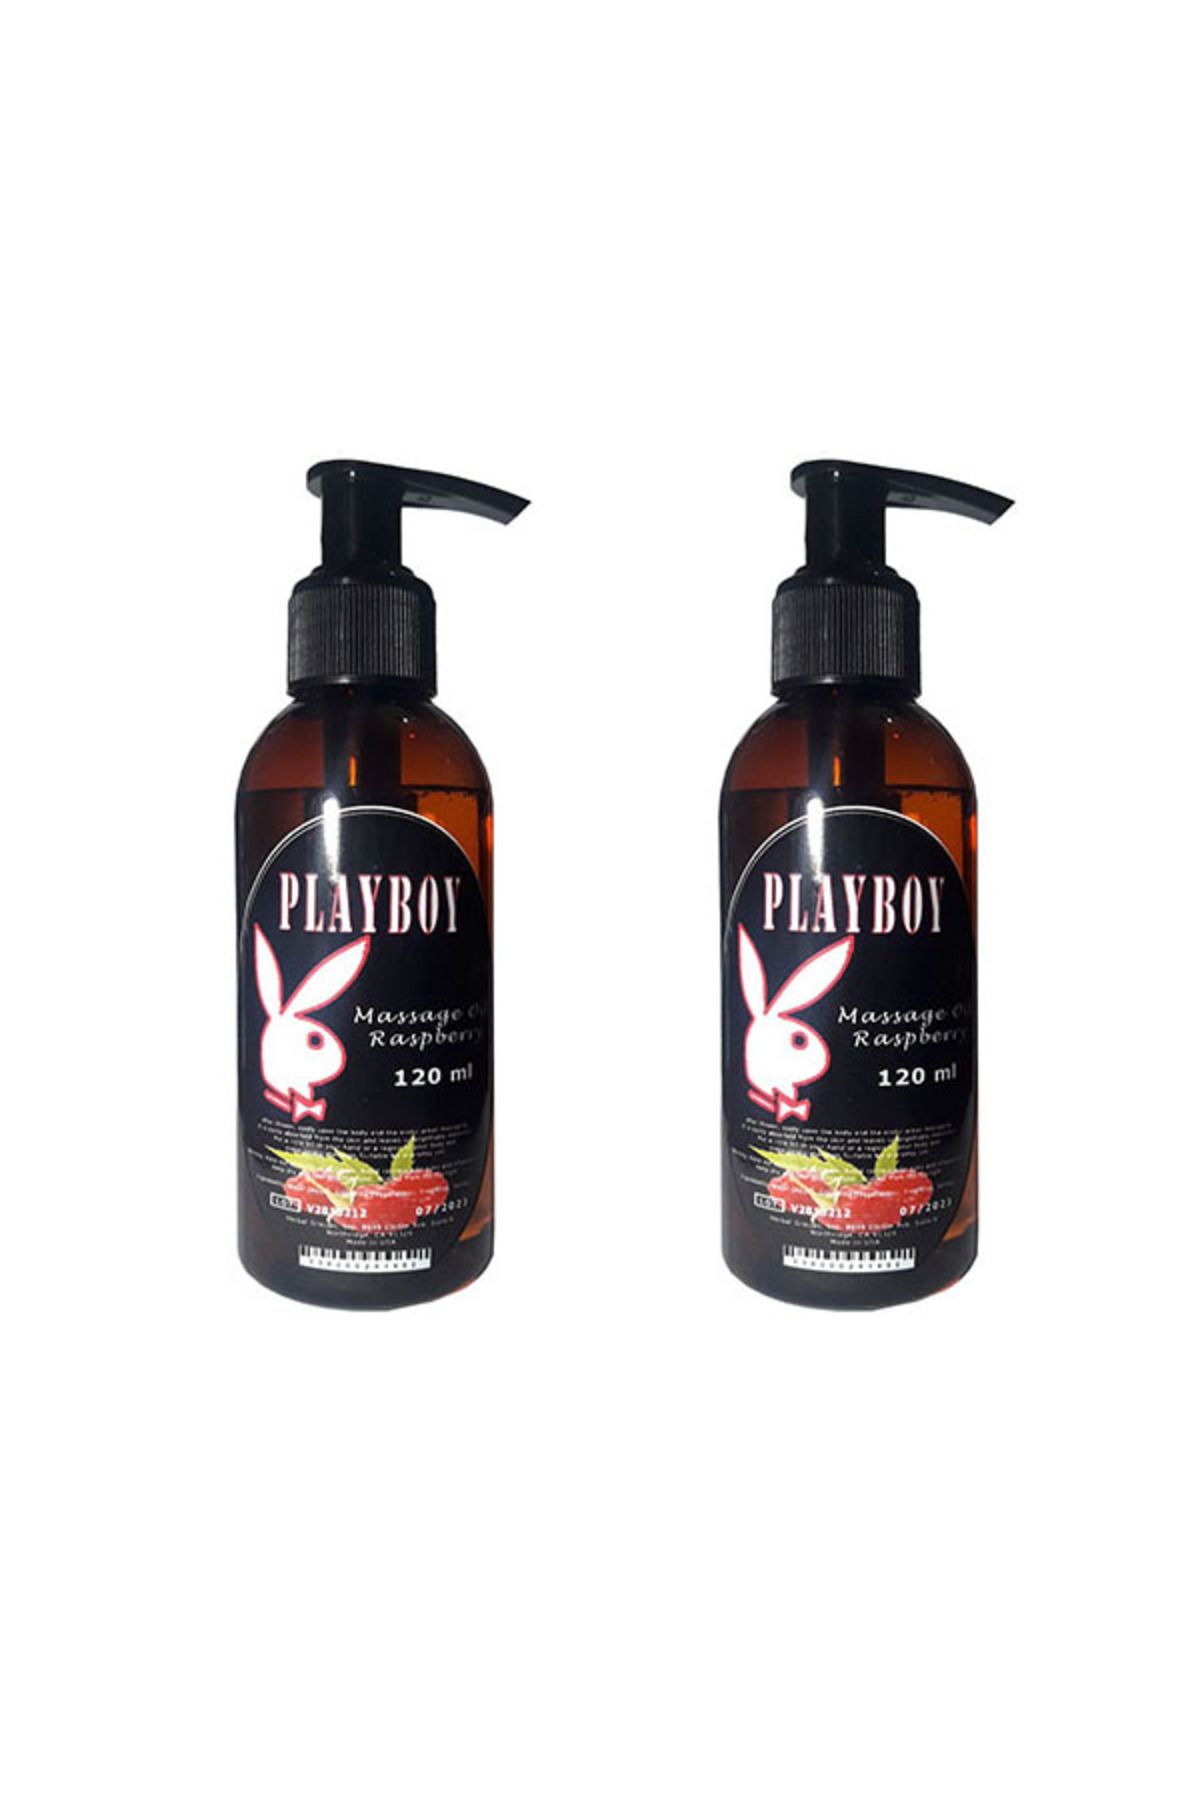 Playboy Ahududulu Masaj Yağı 120ml X 2 ad / Raspberry Flavored Massage Oil